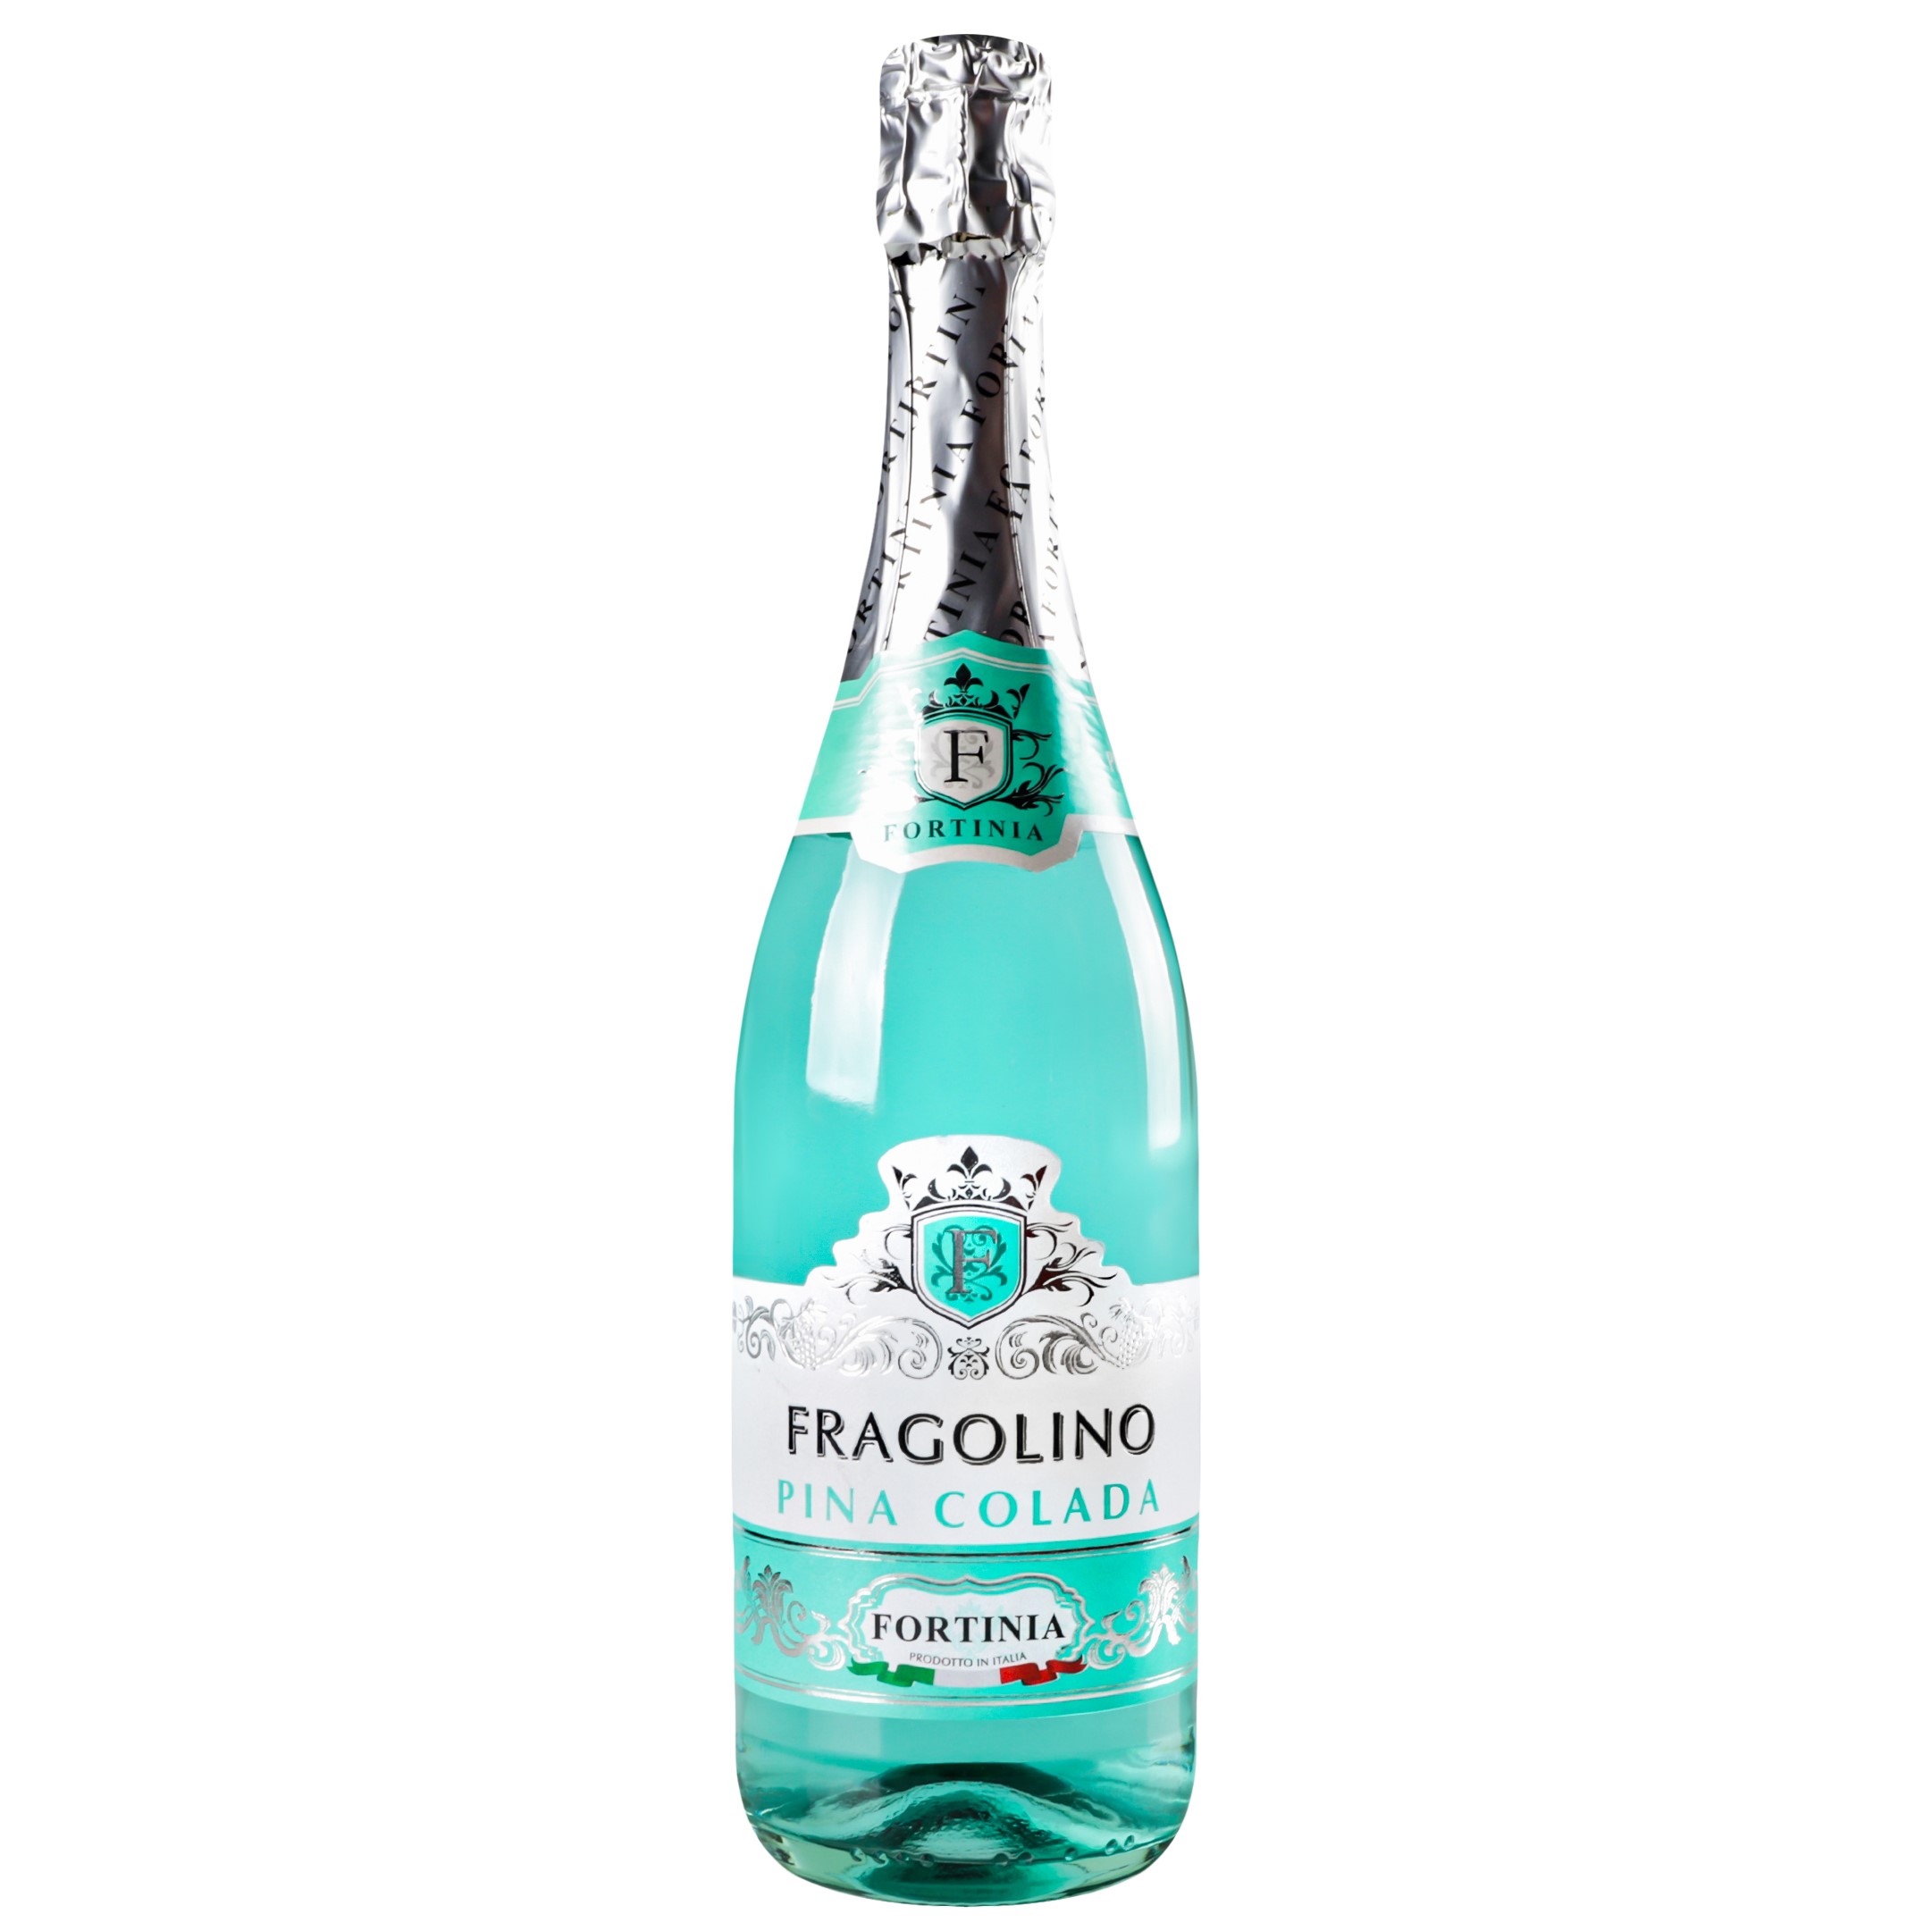 Напій винний Fortinia Fragolino Pina Colada напівсолодкий, 7%, 0,75 л (830272) - фото 1